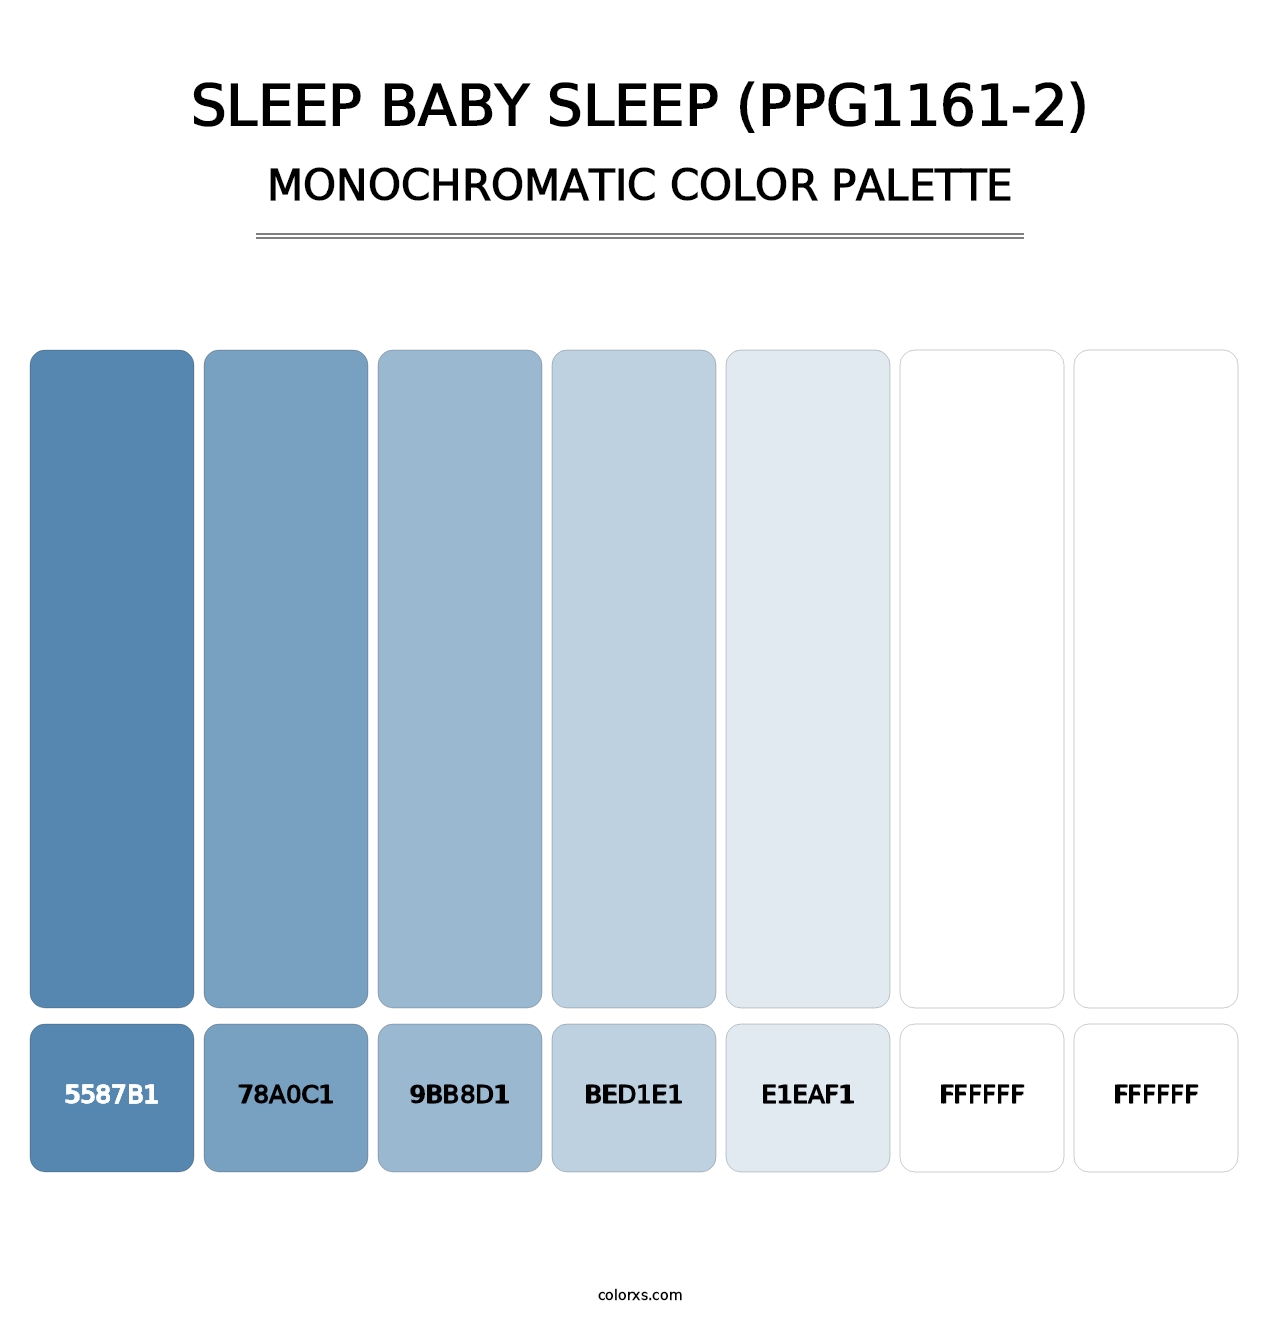 Sleep Baby Sleep (PPG1161-2) - Monochromatic Color Palette